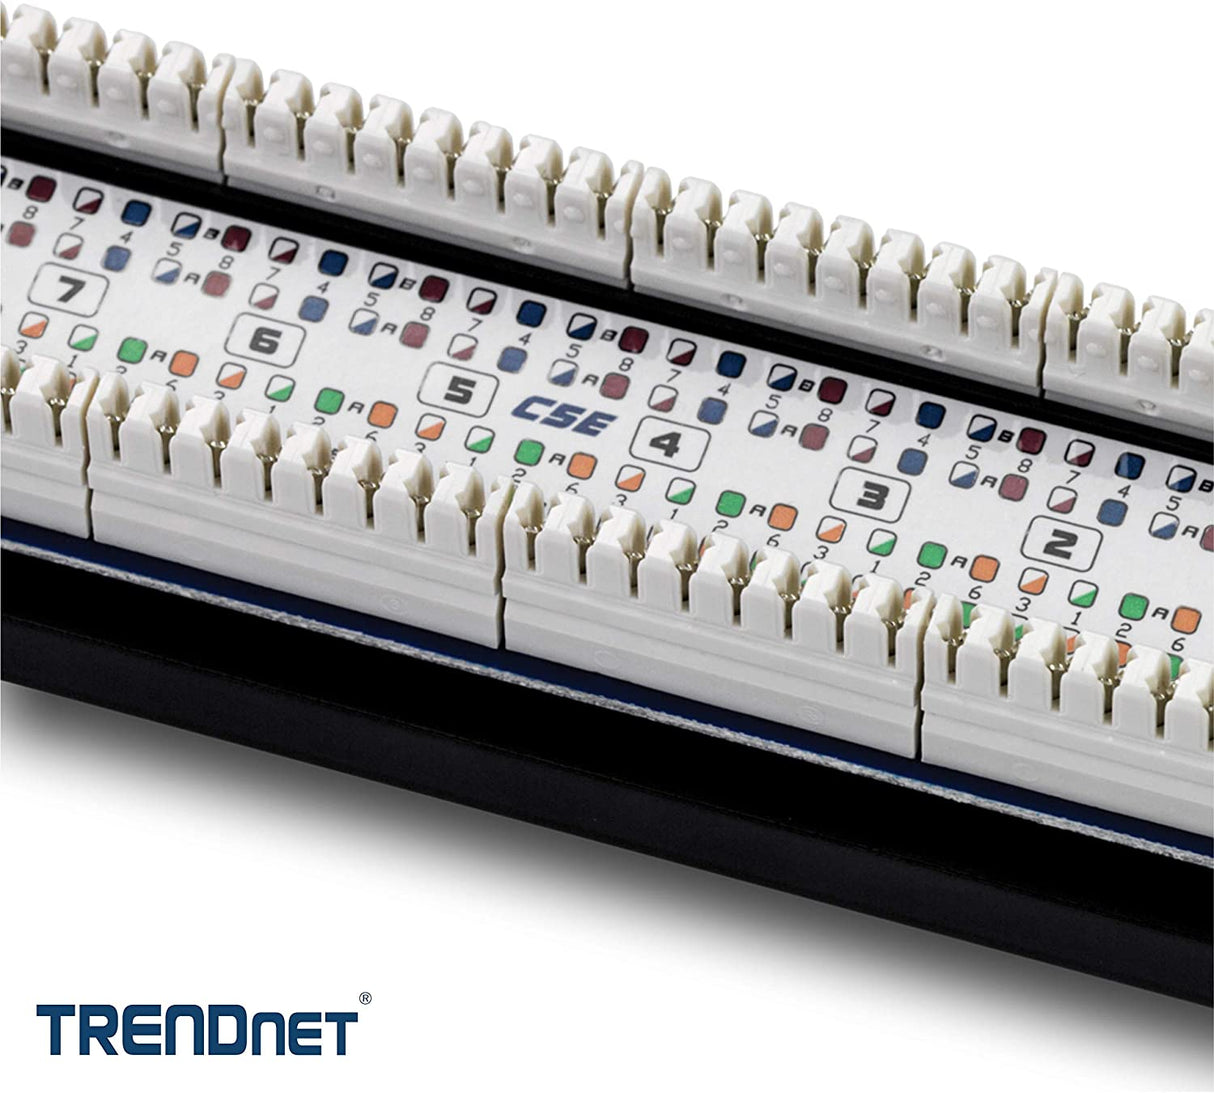 TRENDnet 8 Port Cat5/5e Unshielded Patch Panel,TC-P08C5E, Wallmount or Rackmount, 10 Inch Wide, 8 x Gigabit RJ-45 Ethernet Ports, 100 Mhz Connection, Color Coded Labeling,110 IDC Terminal Blocks,black